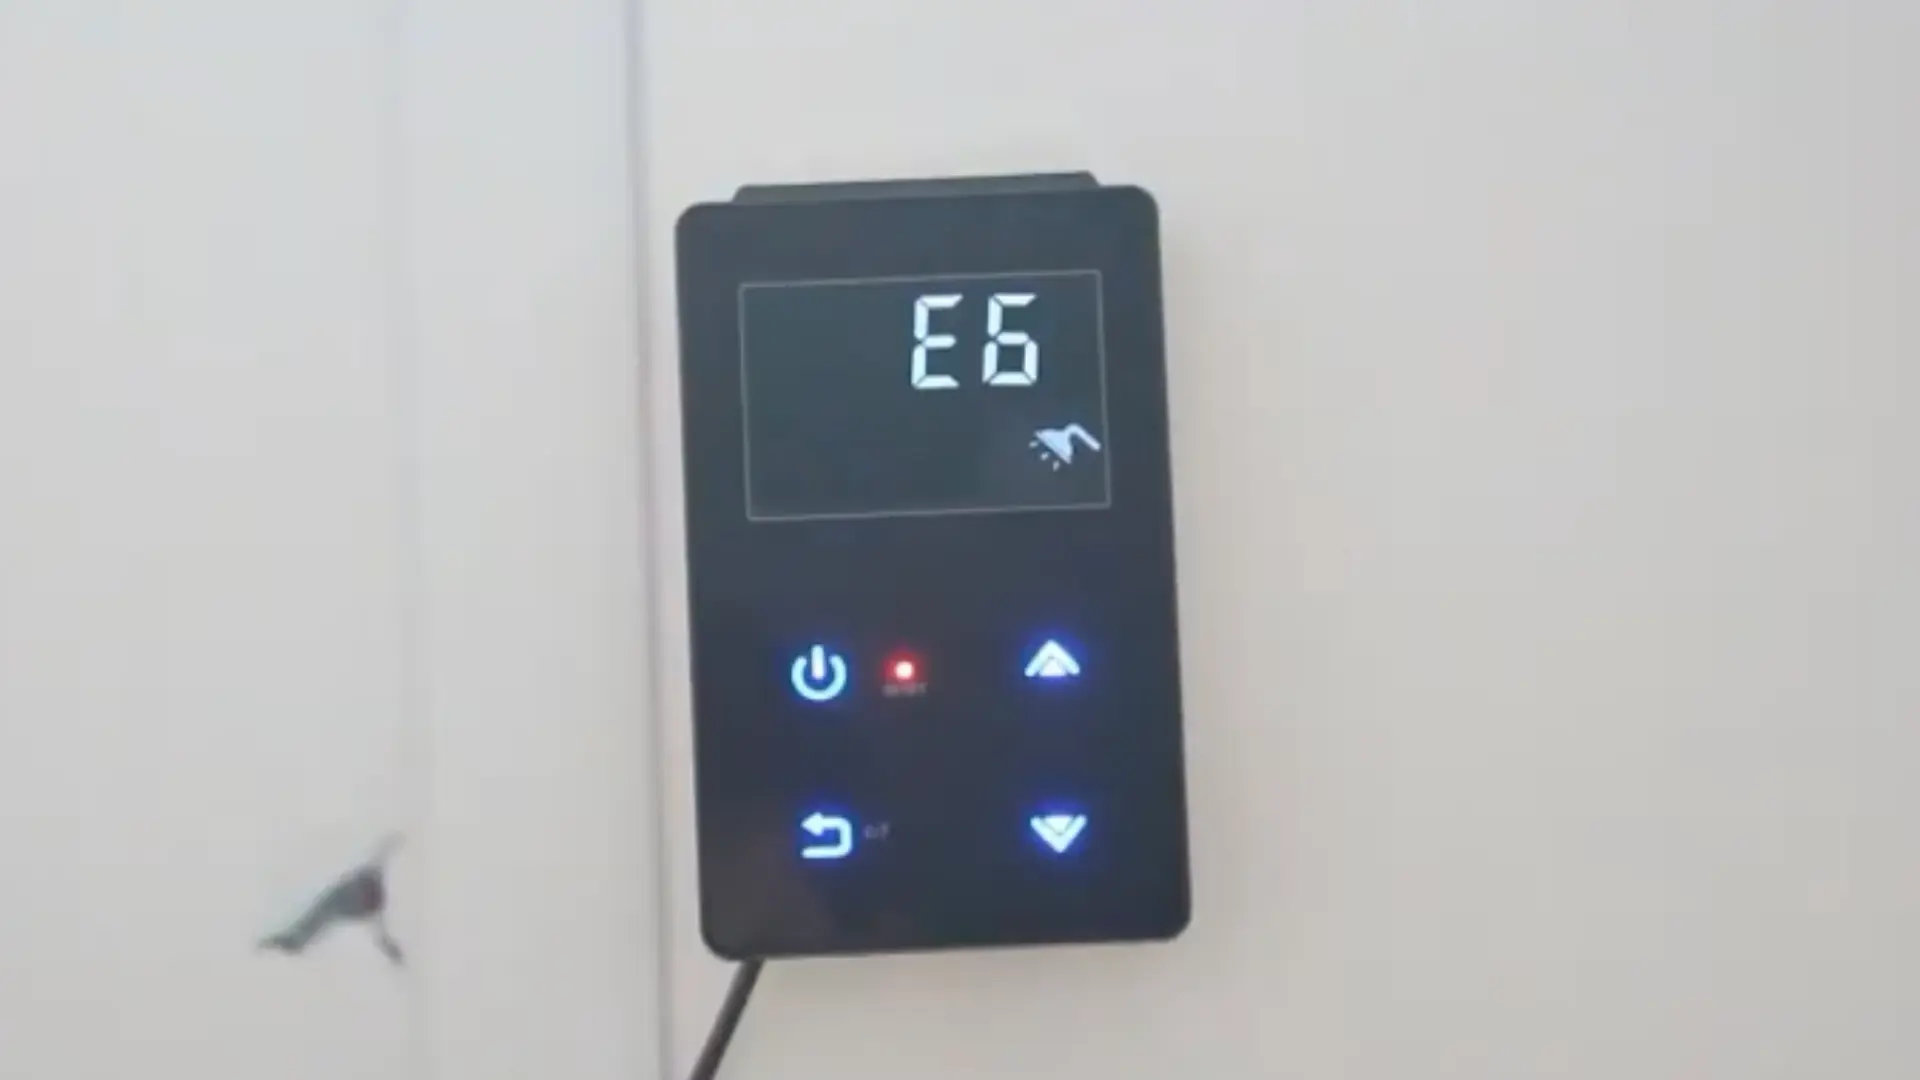 fogatti tankless water heater e6 error code